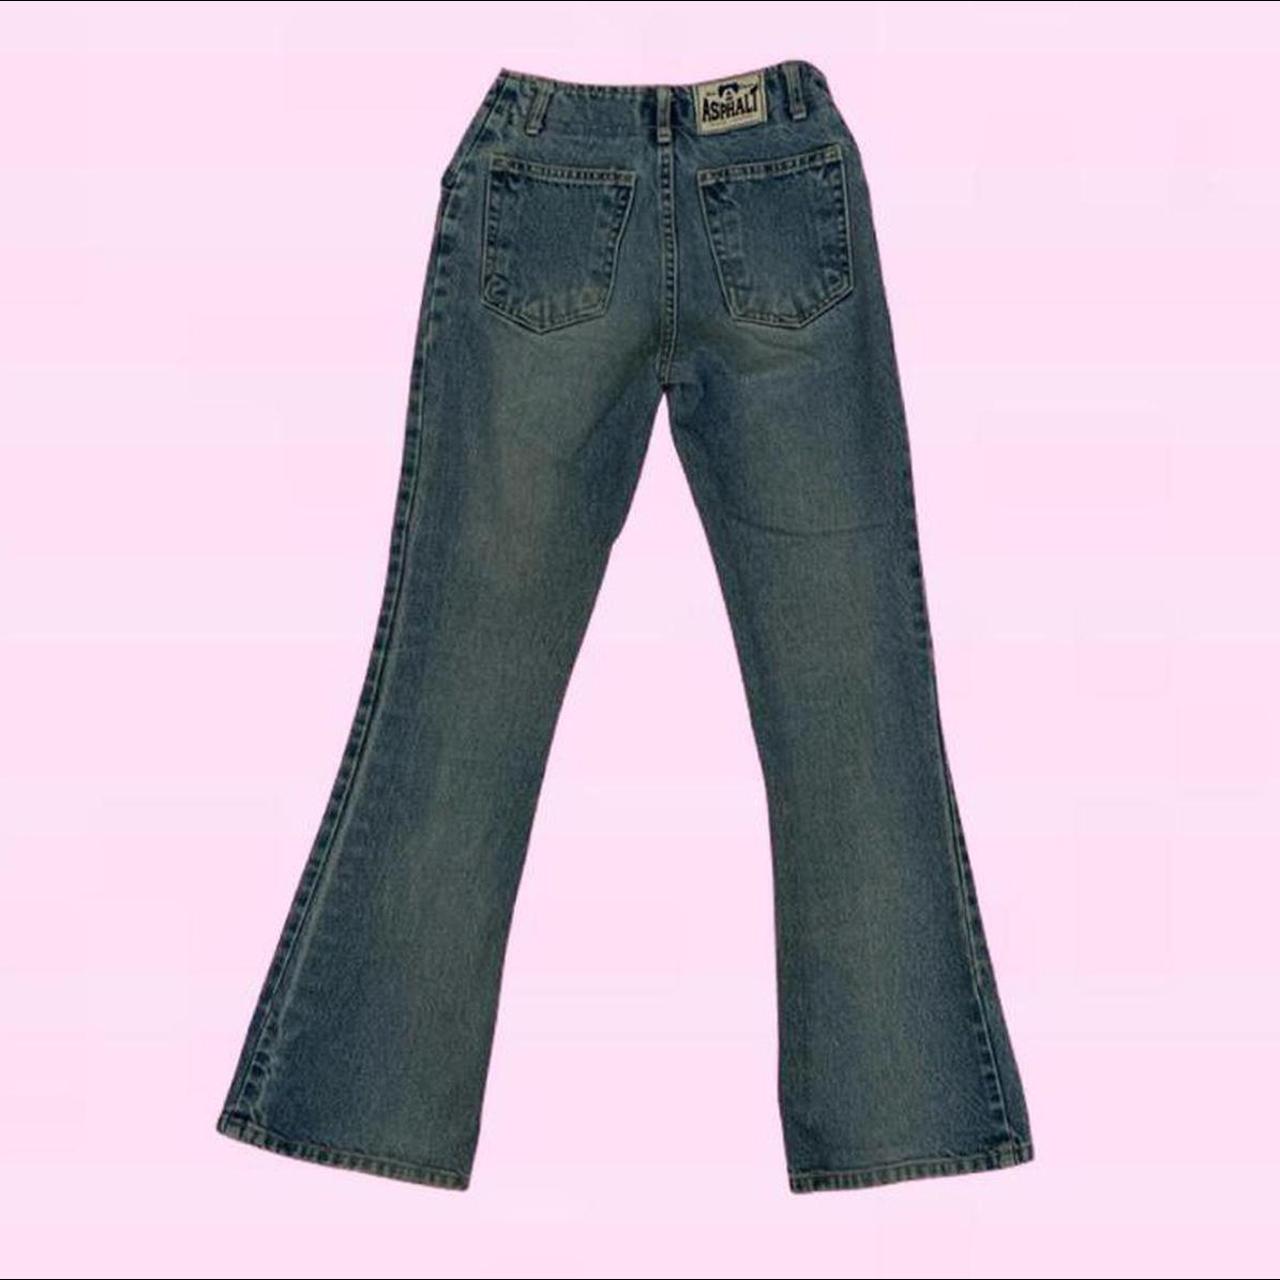 True 90s vintage low rise flare jeans Brand:... - Depop